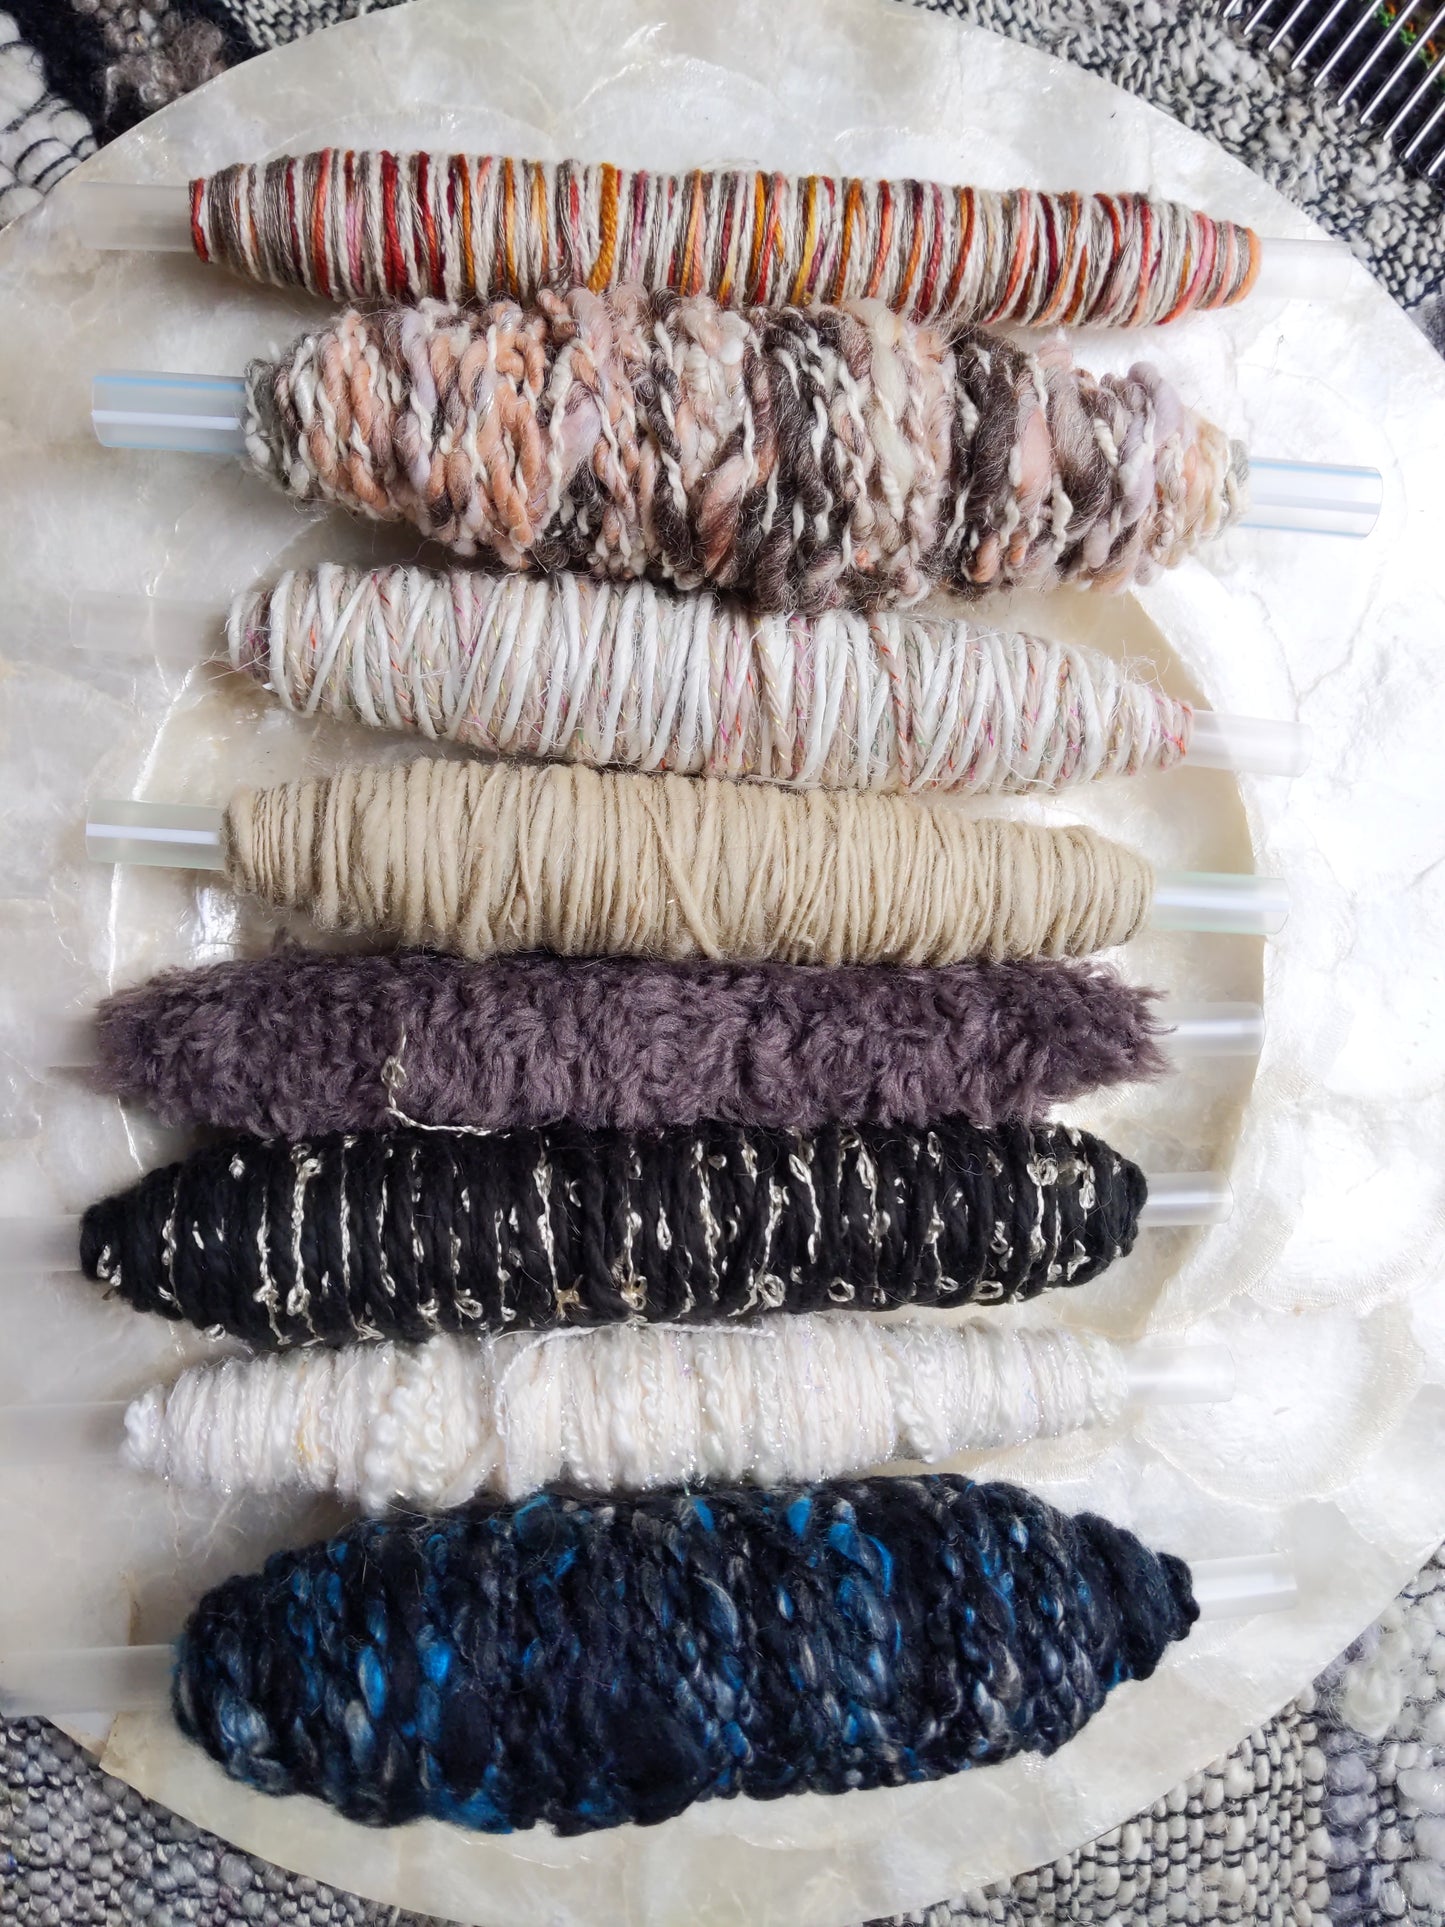 Plying and Weaving Textured Yarn Bobbins (Lot 32)